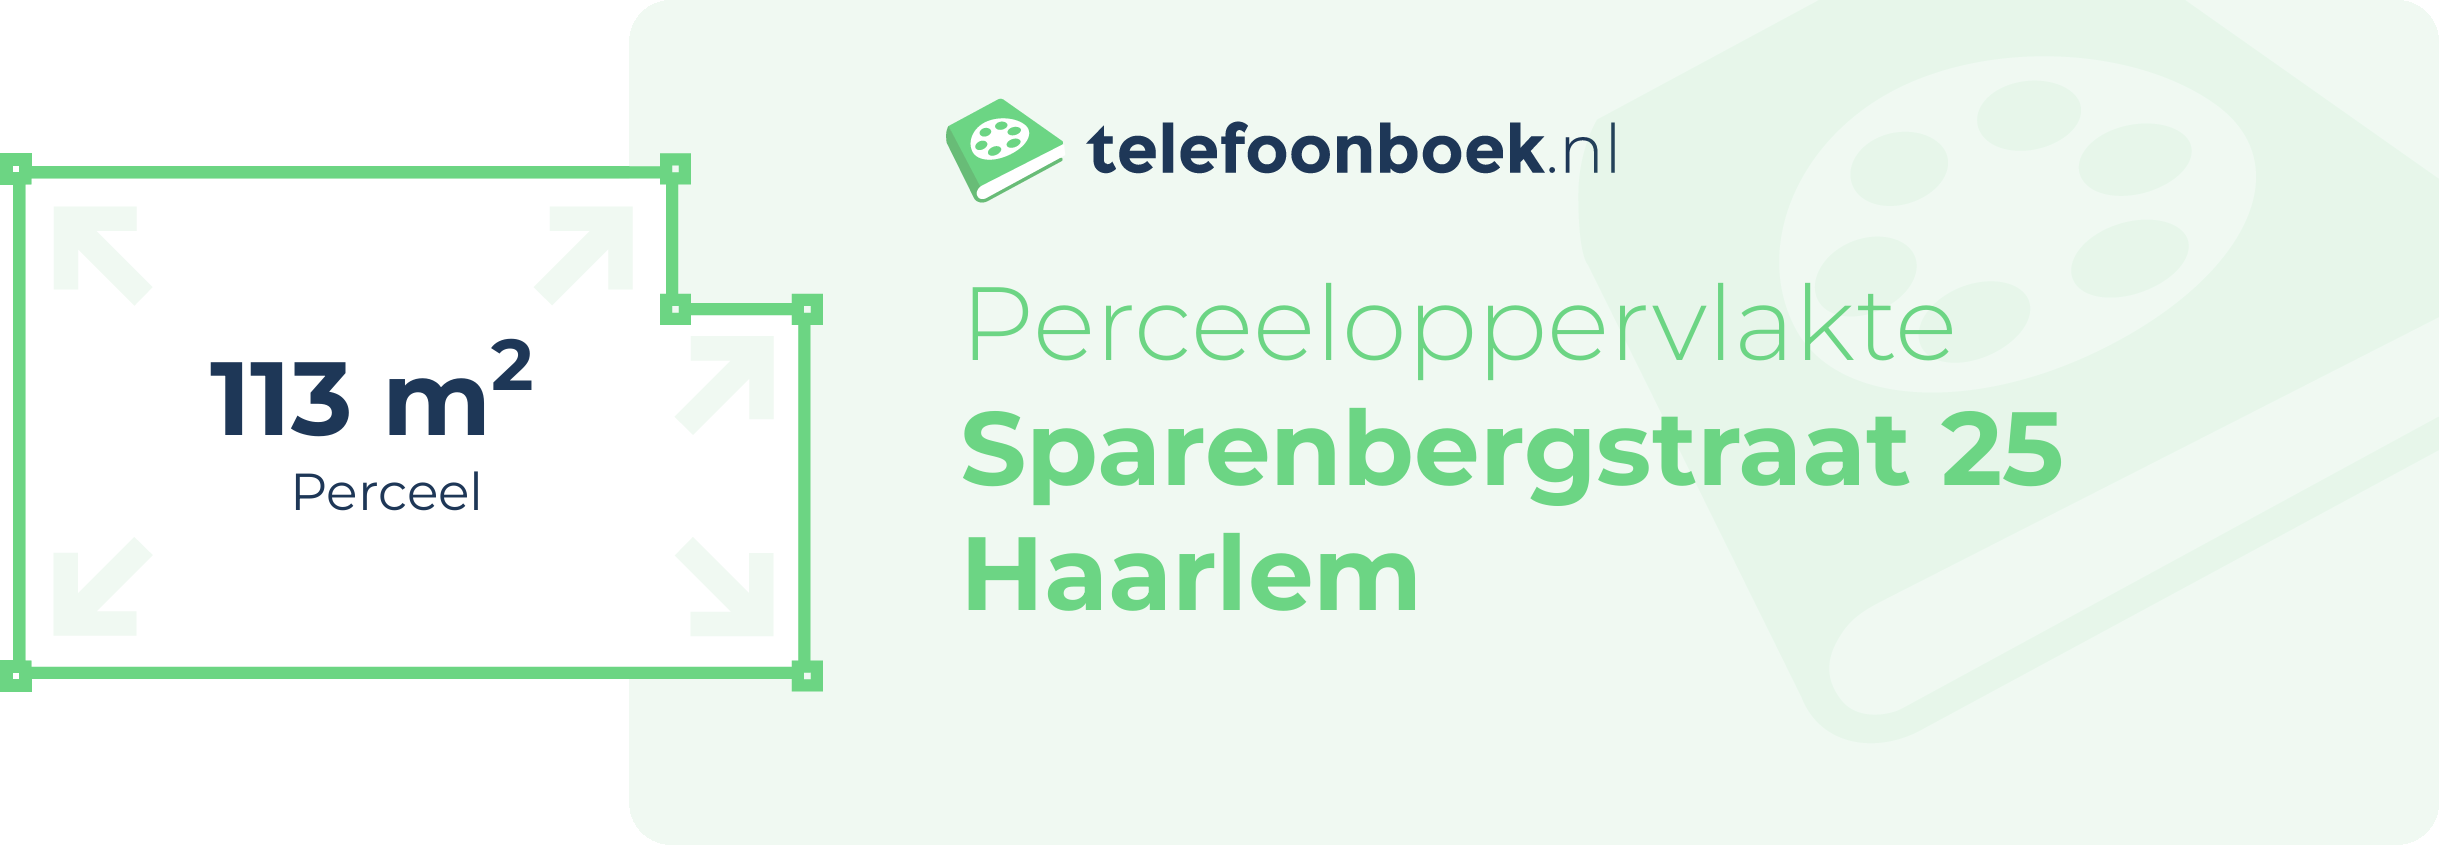 Perceeloppervlakte Sparenbergstraat 25 Haarlem